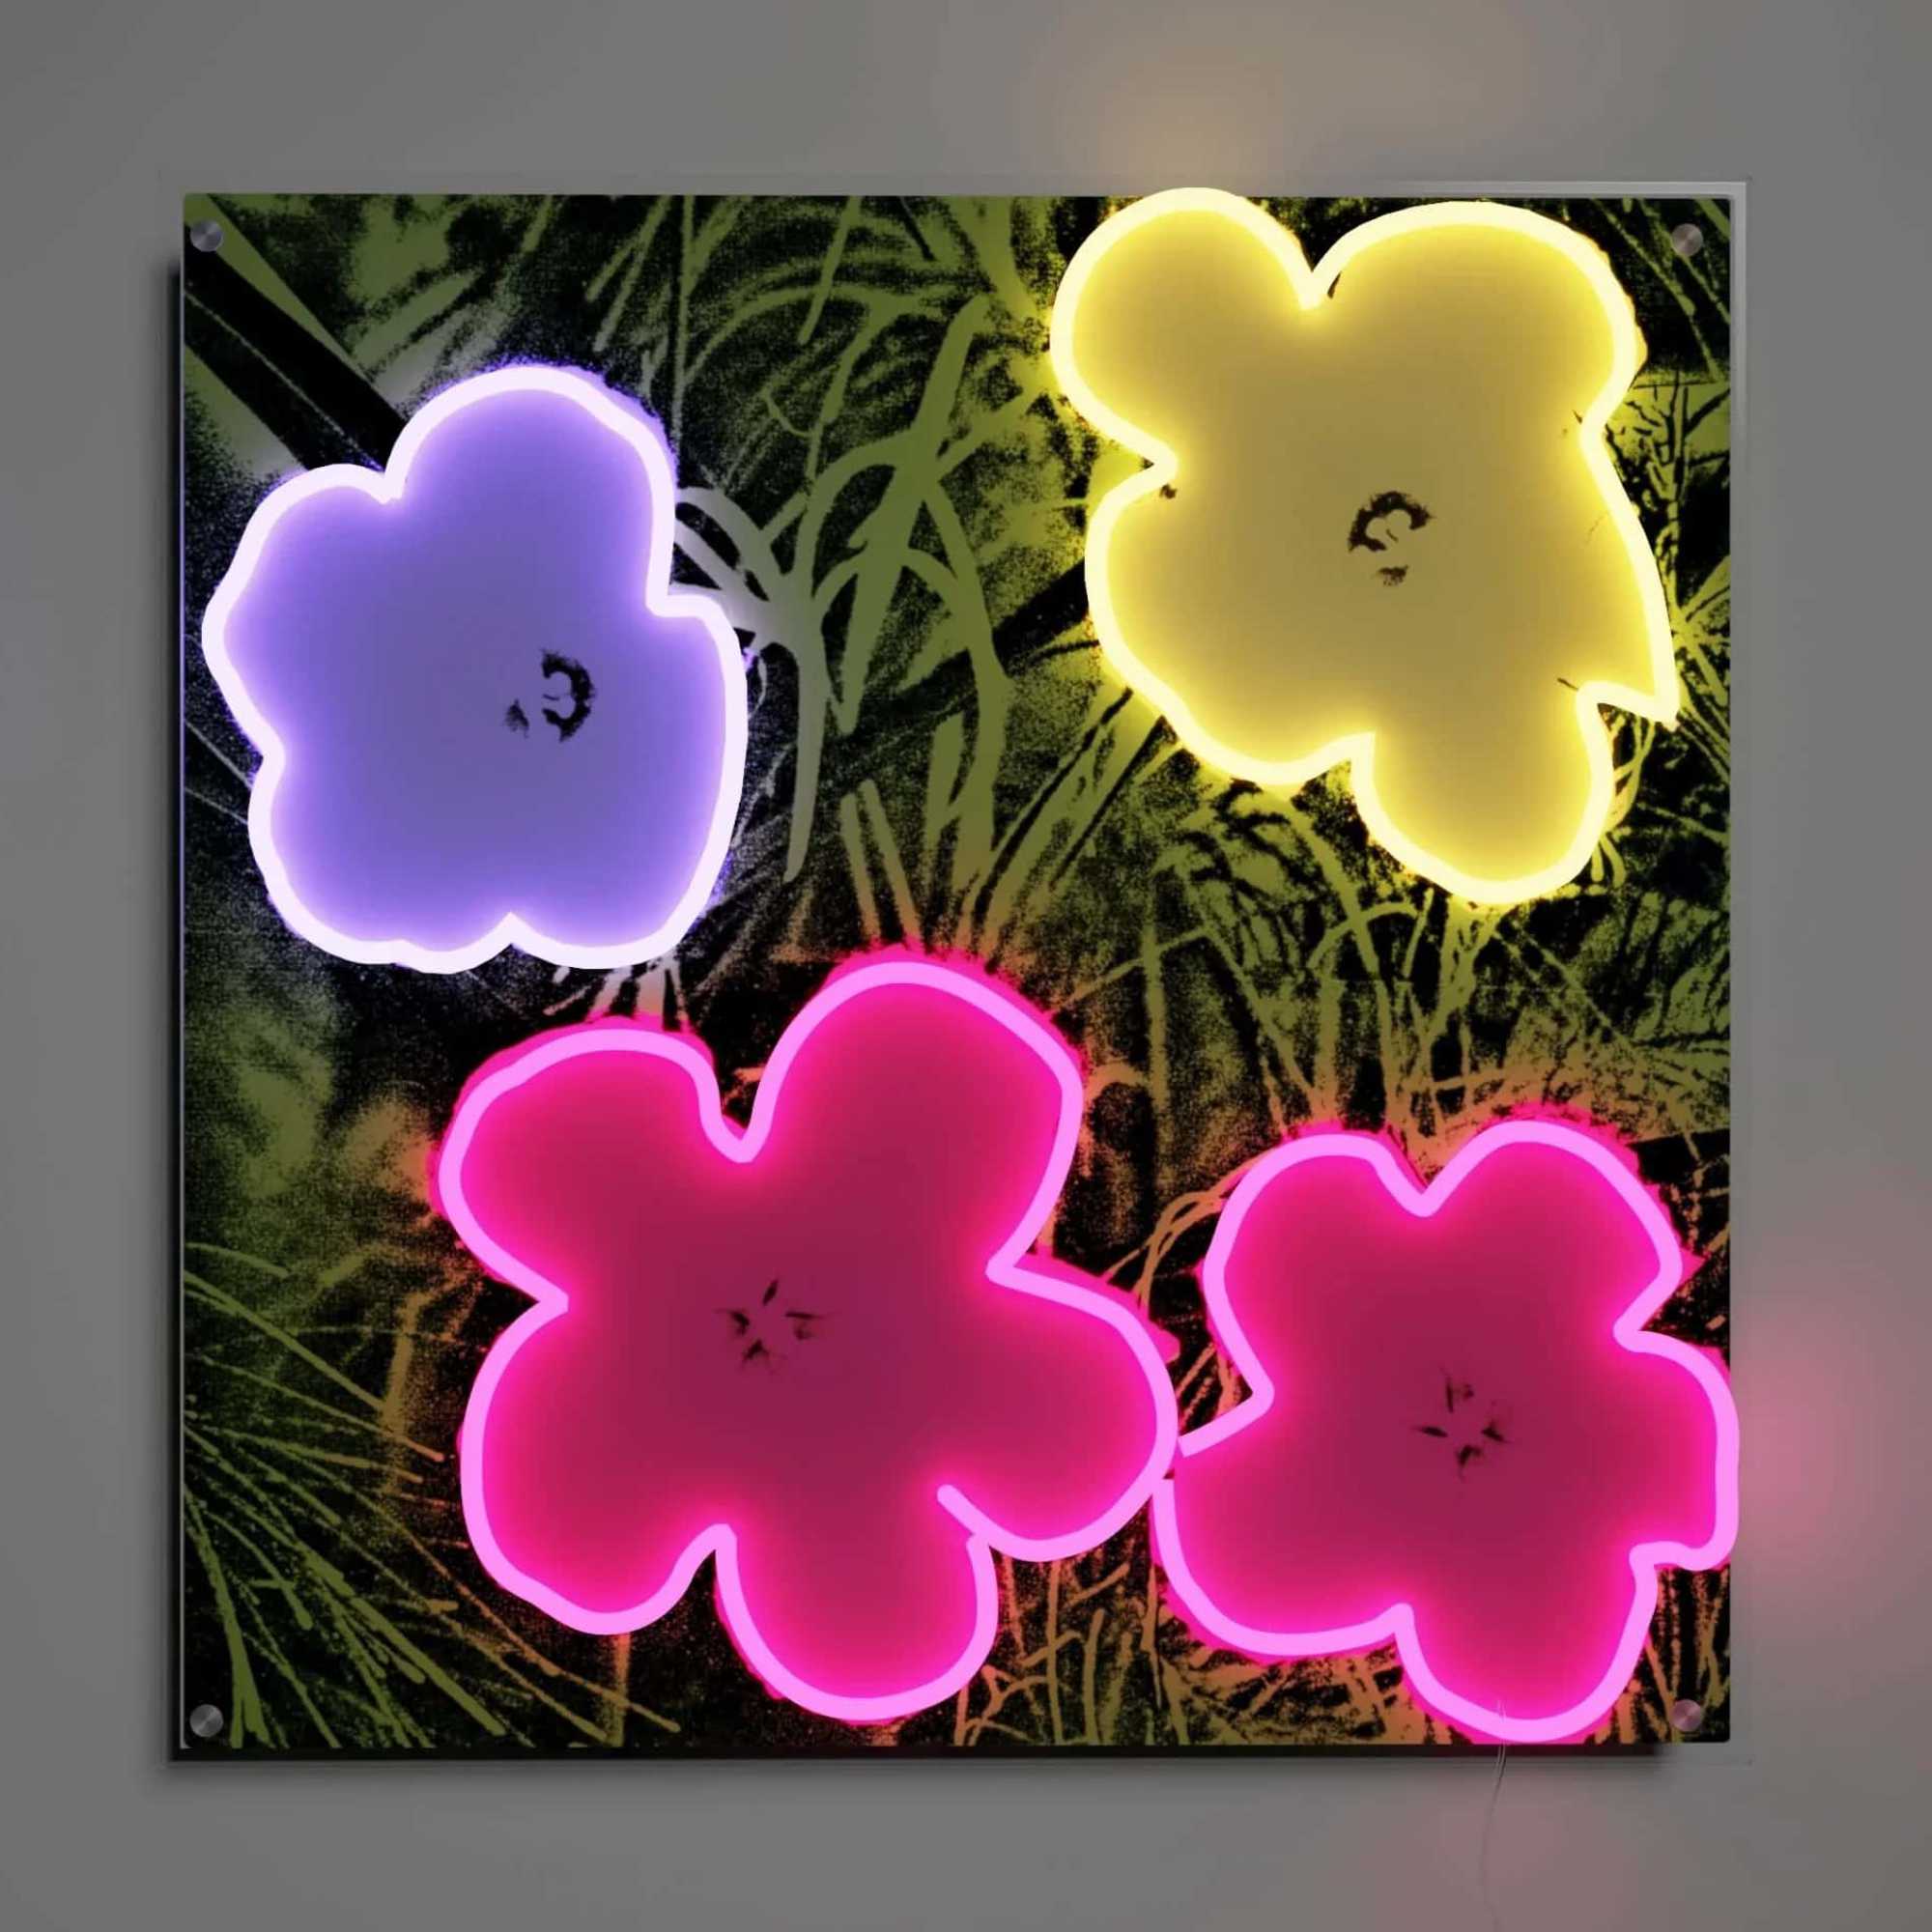 Yellowpop Flowers by Andy Warhol